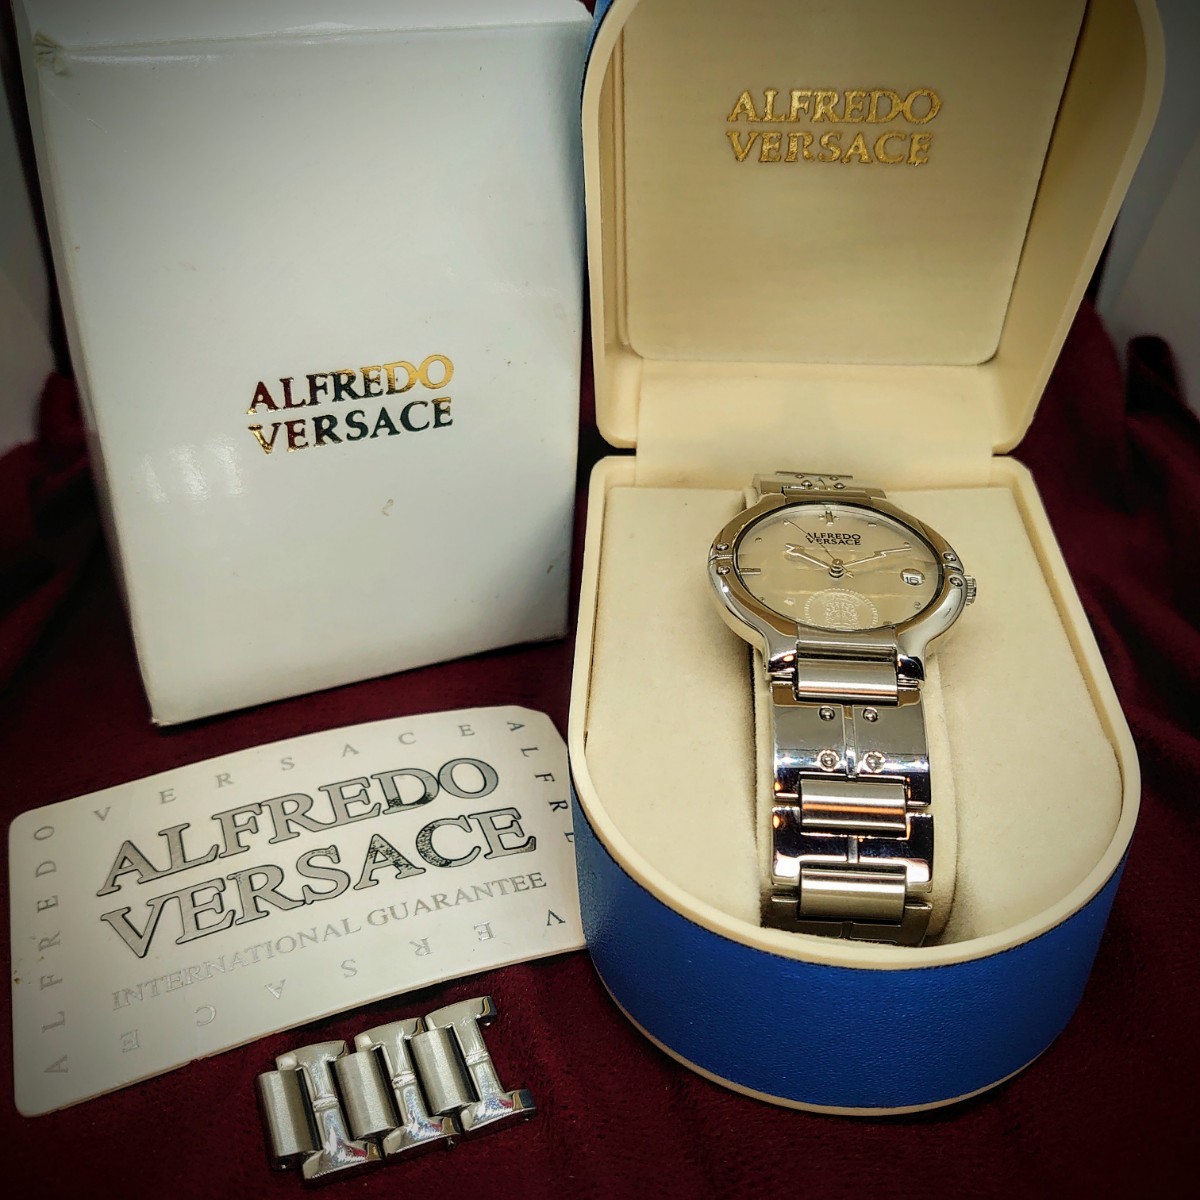 Yahoo!オークション -「alfredo versace」(アクセサリー、時計) の落札 